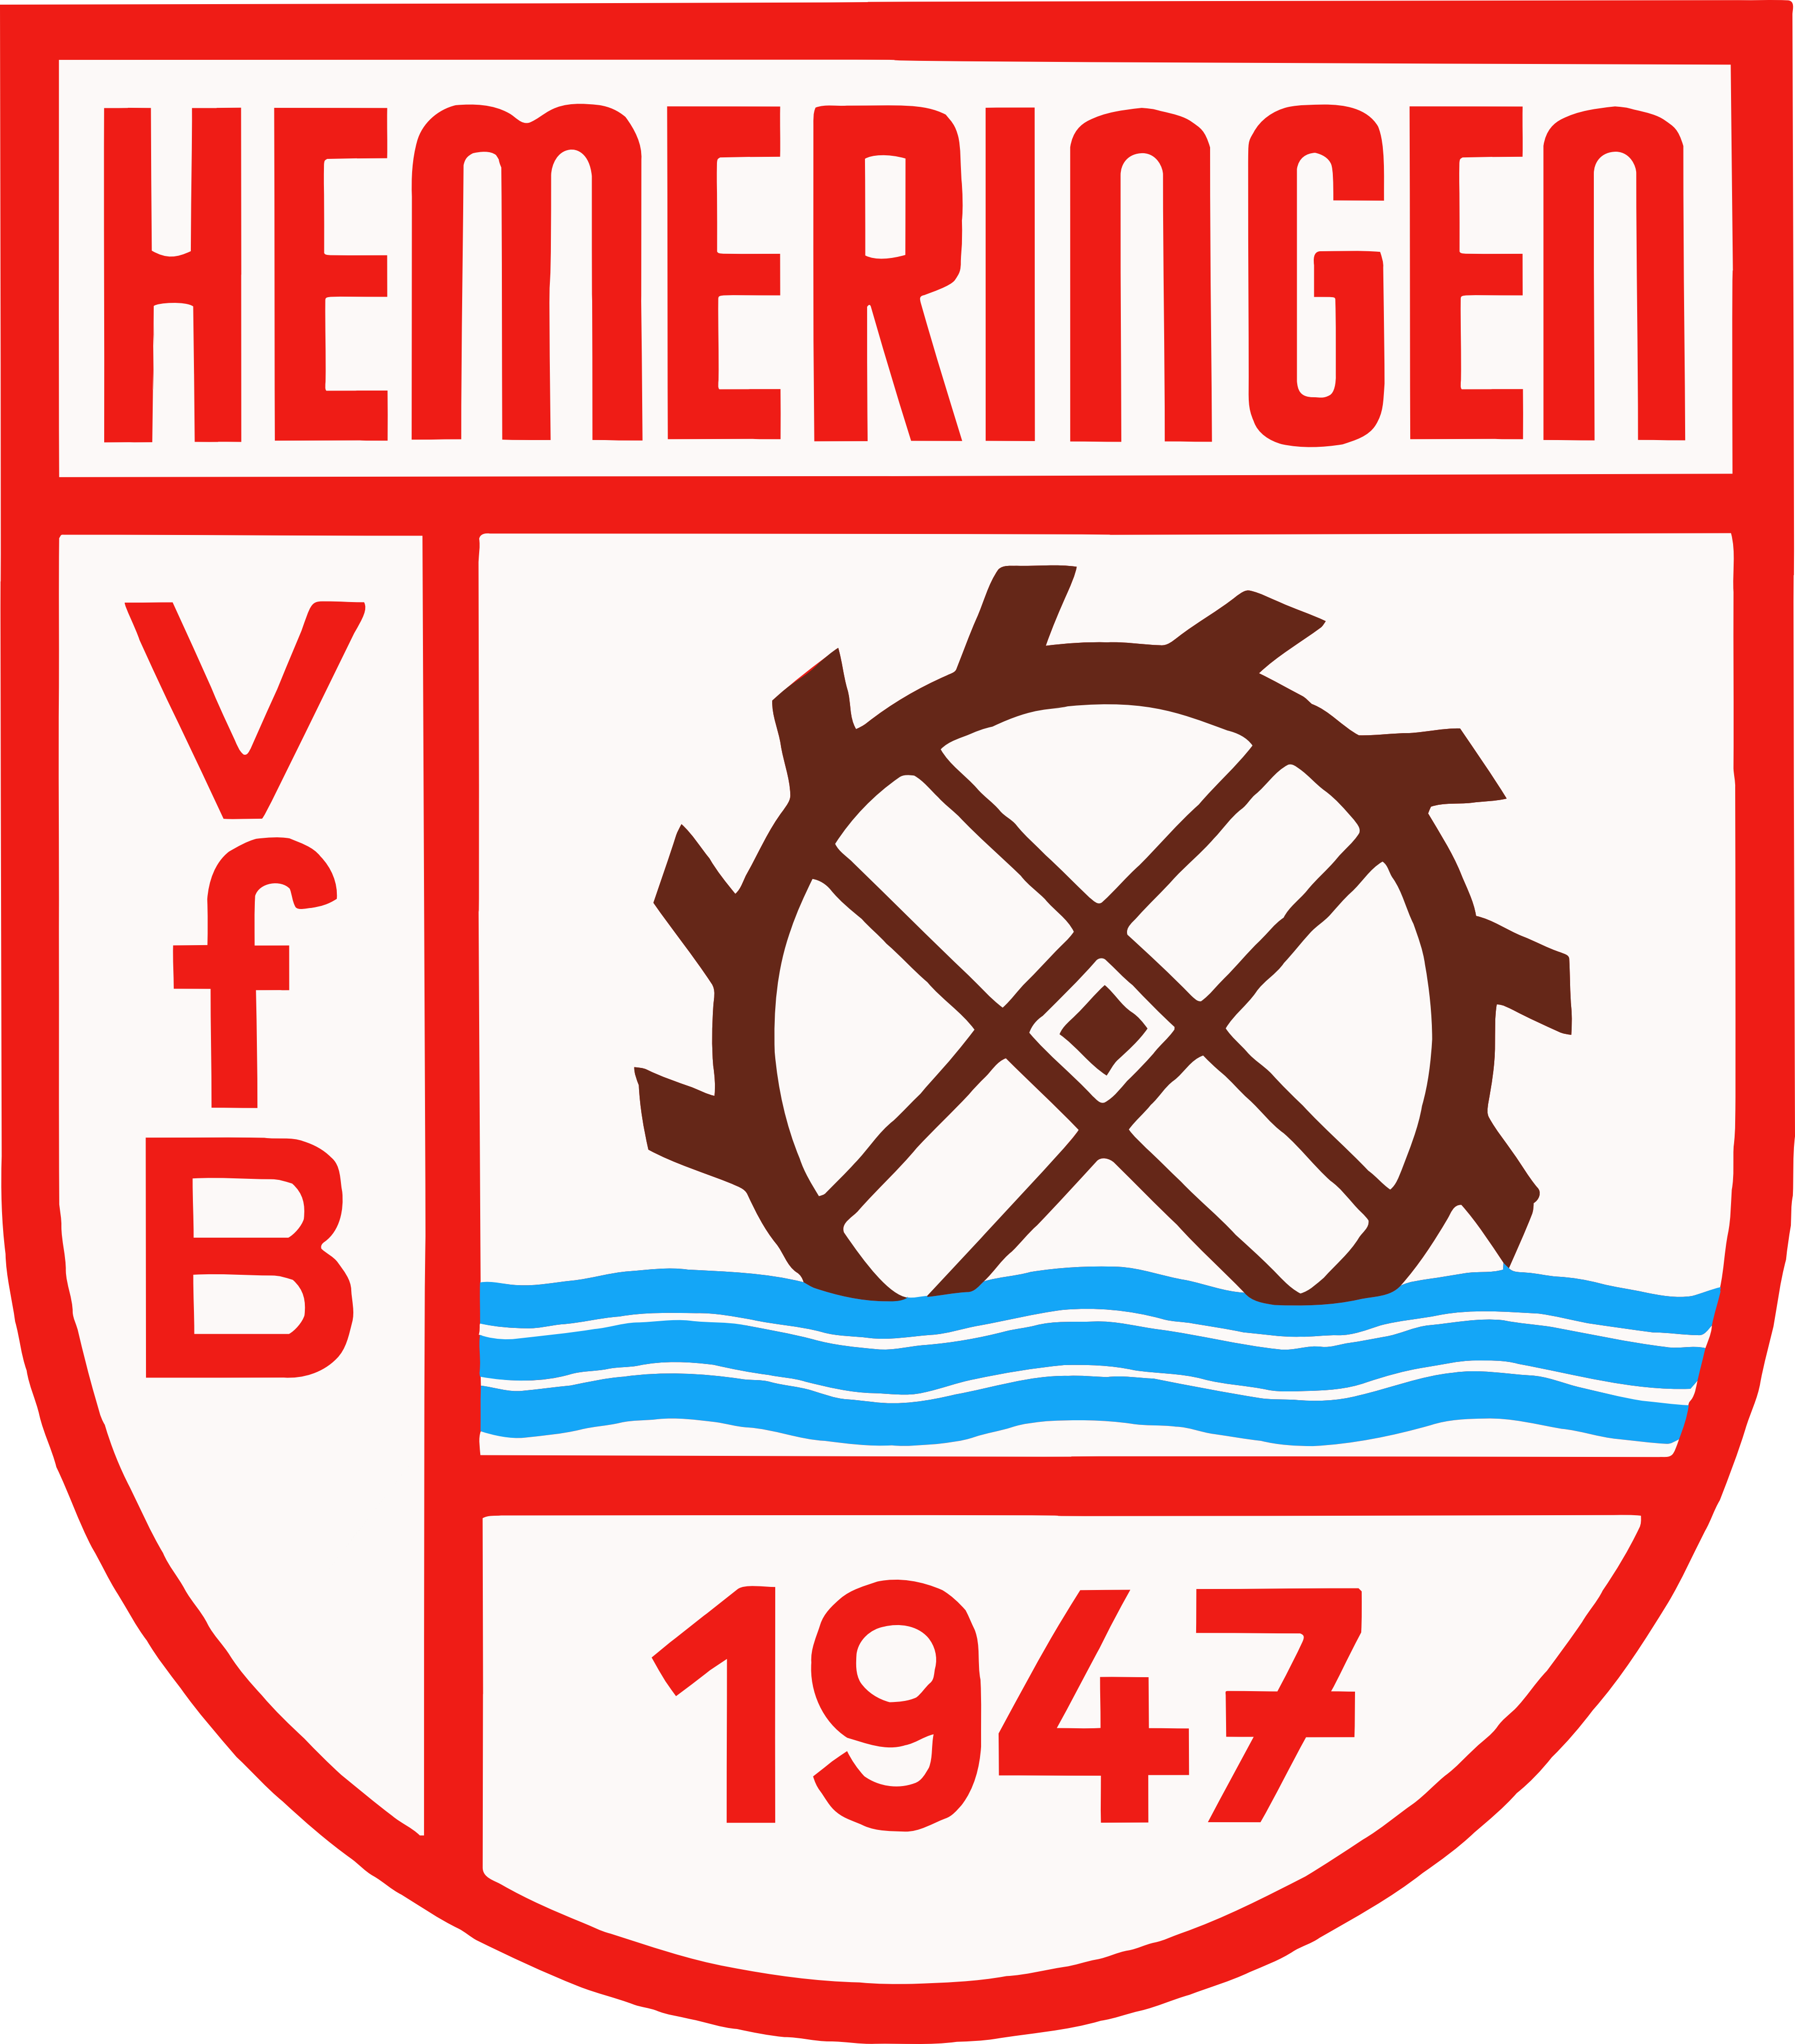 VfB Hemeringen - Fanshop